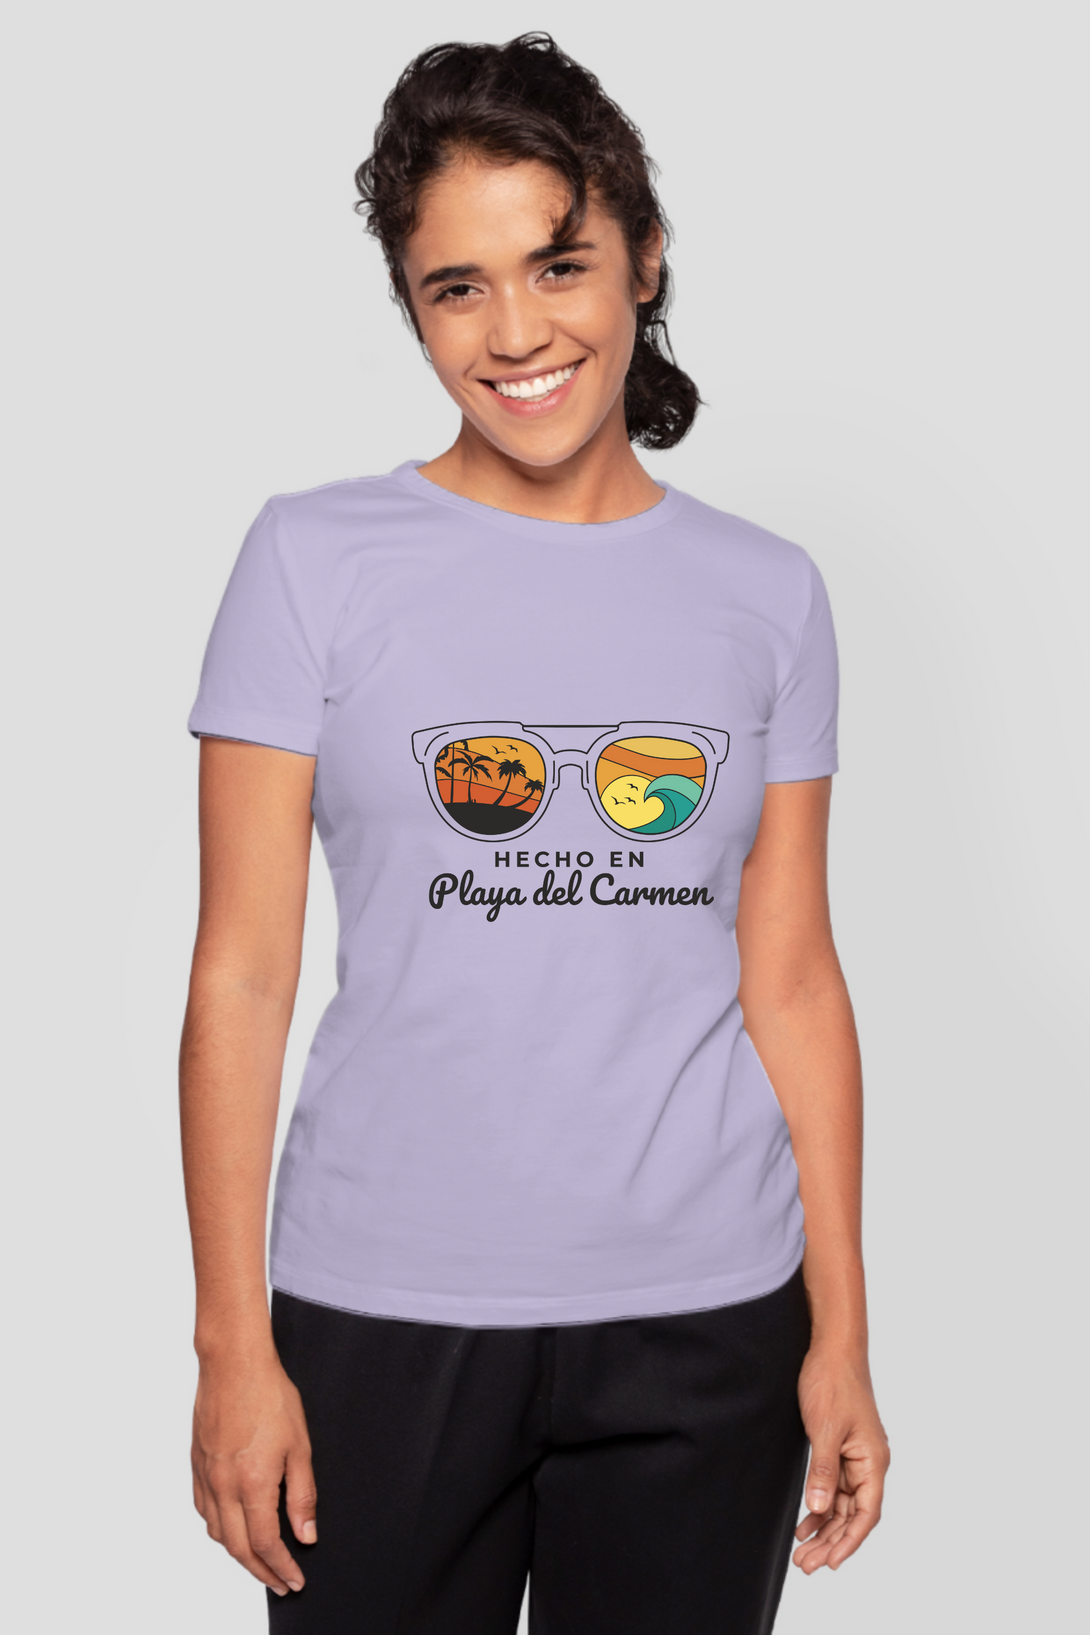 Made In Playa Del Carmen Printed T-Shirt For Women - WowWaves - 10